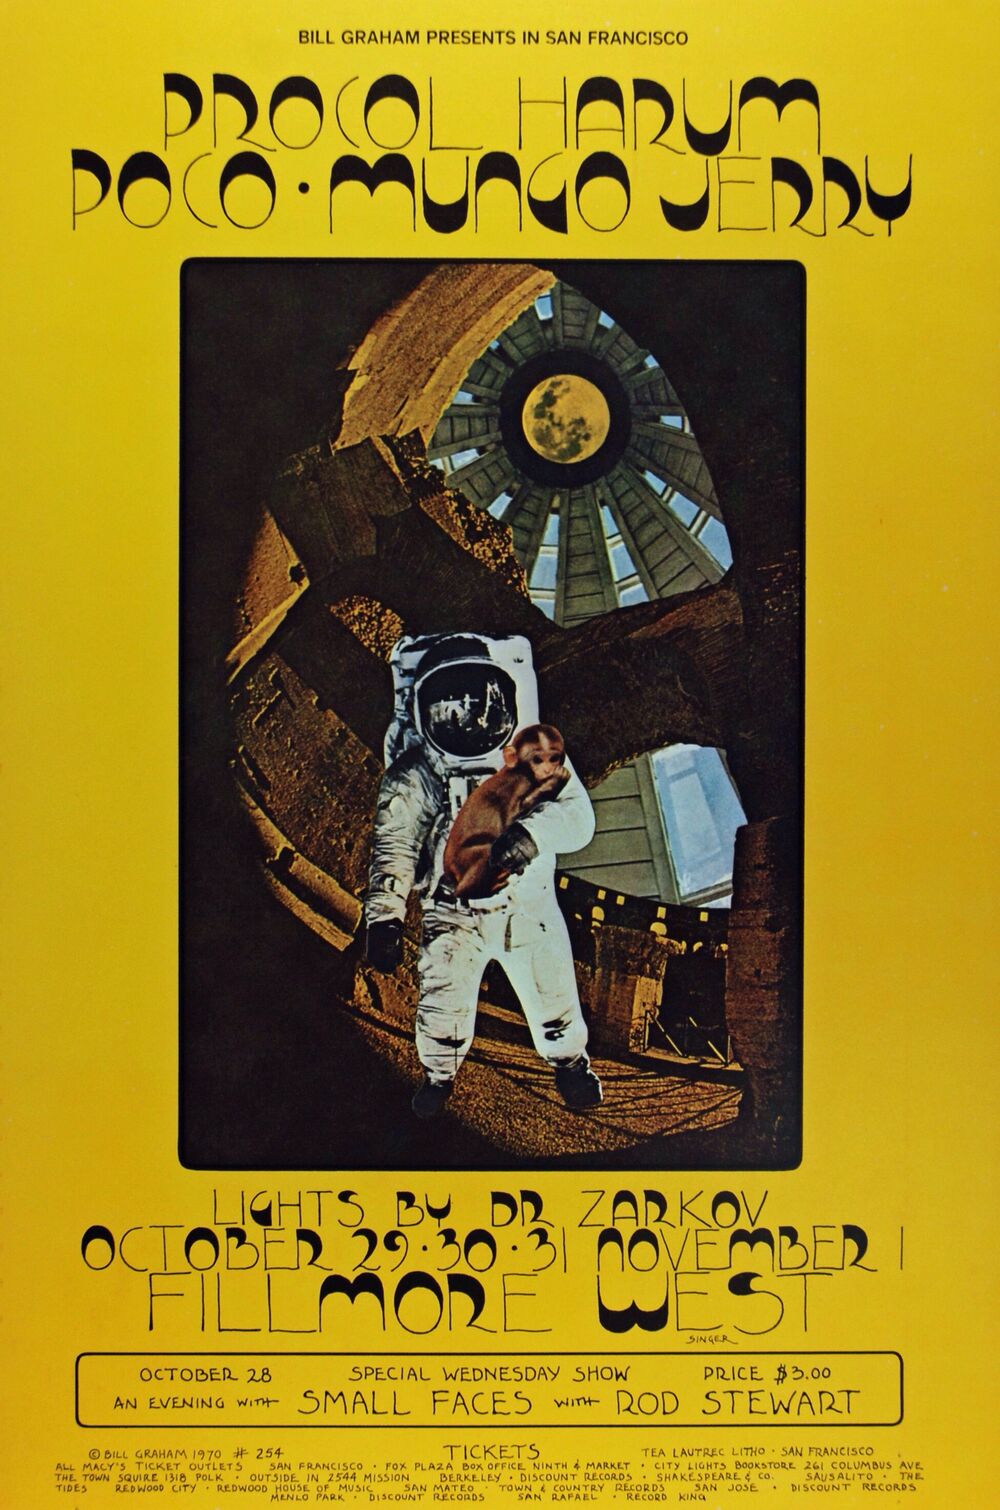 Faces - October 28, 1970 Fillmore West San Francisco, CA -playbill poster 3